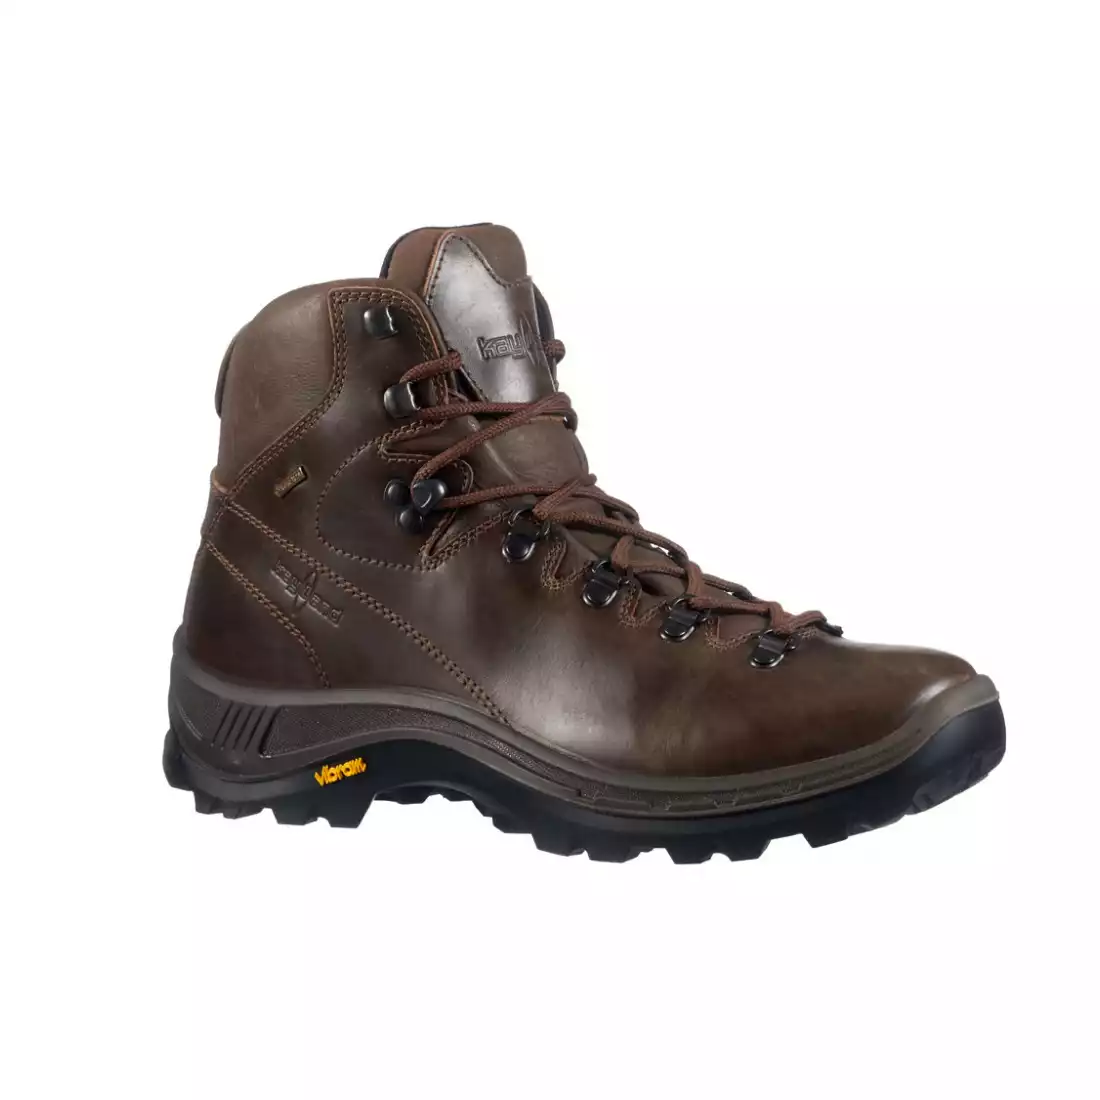 KAYLAND CUMBRIA GTX Trekking shoes, GORE-TEX, VIBRAM, Brown